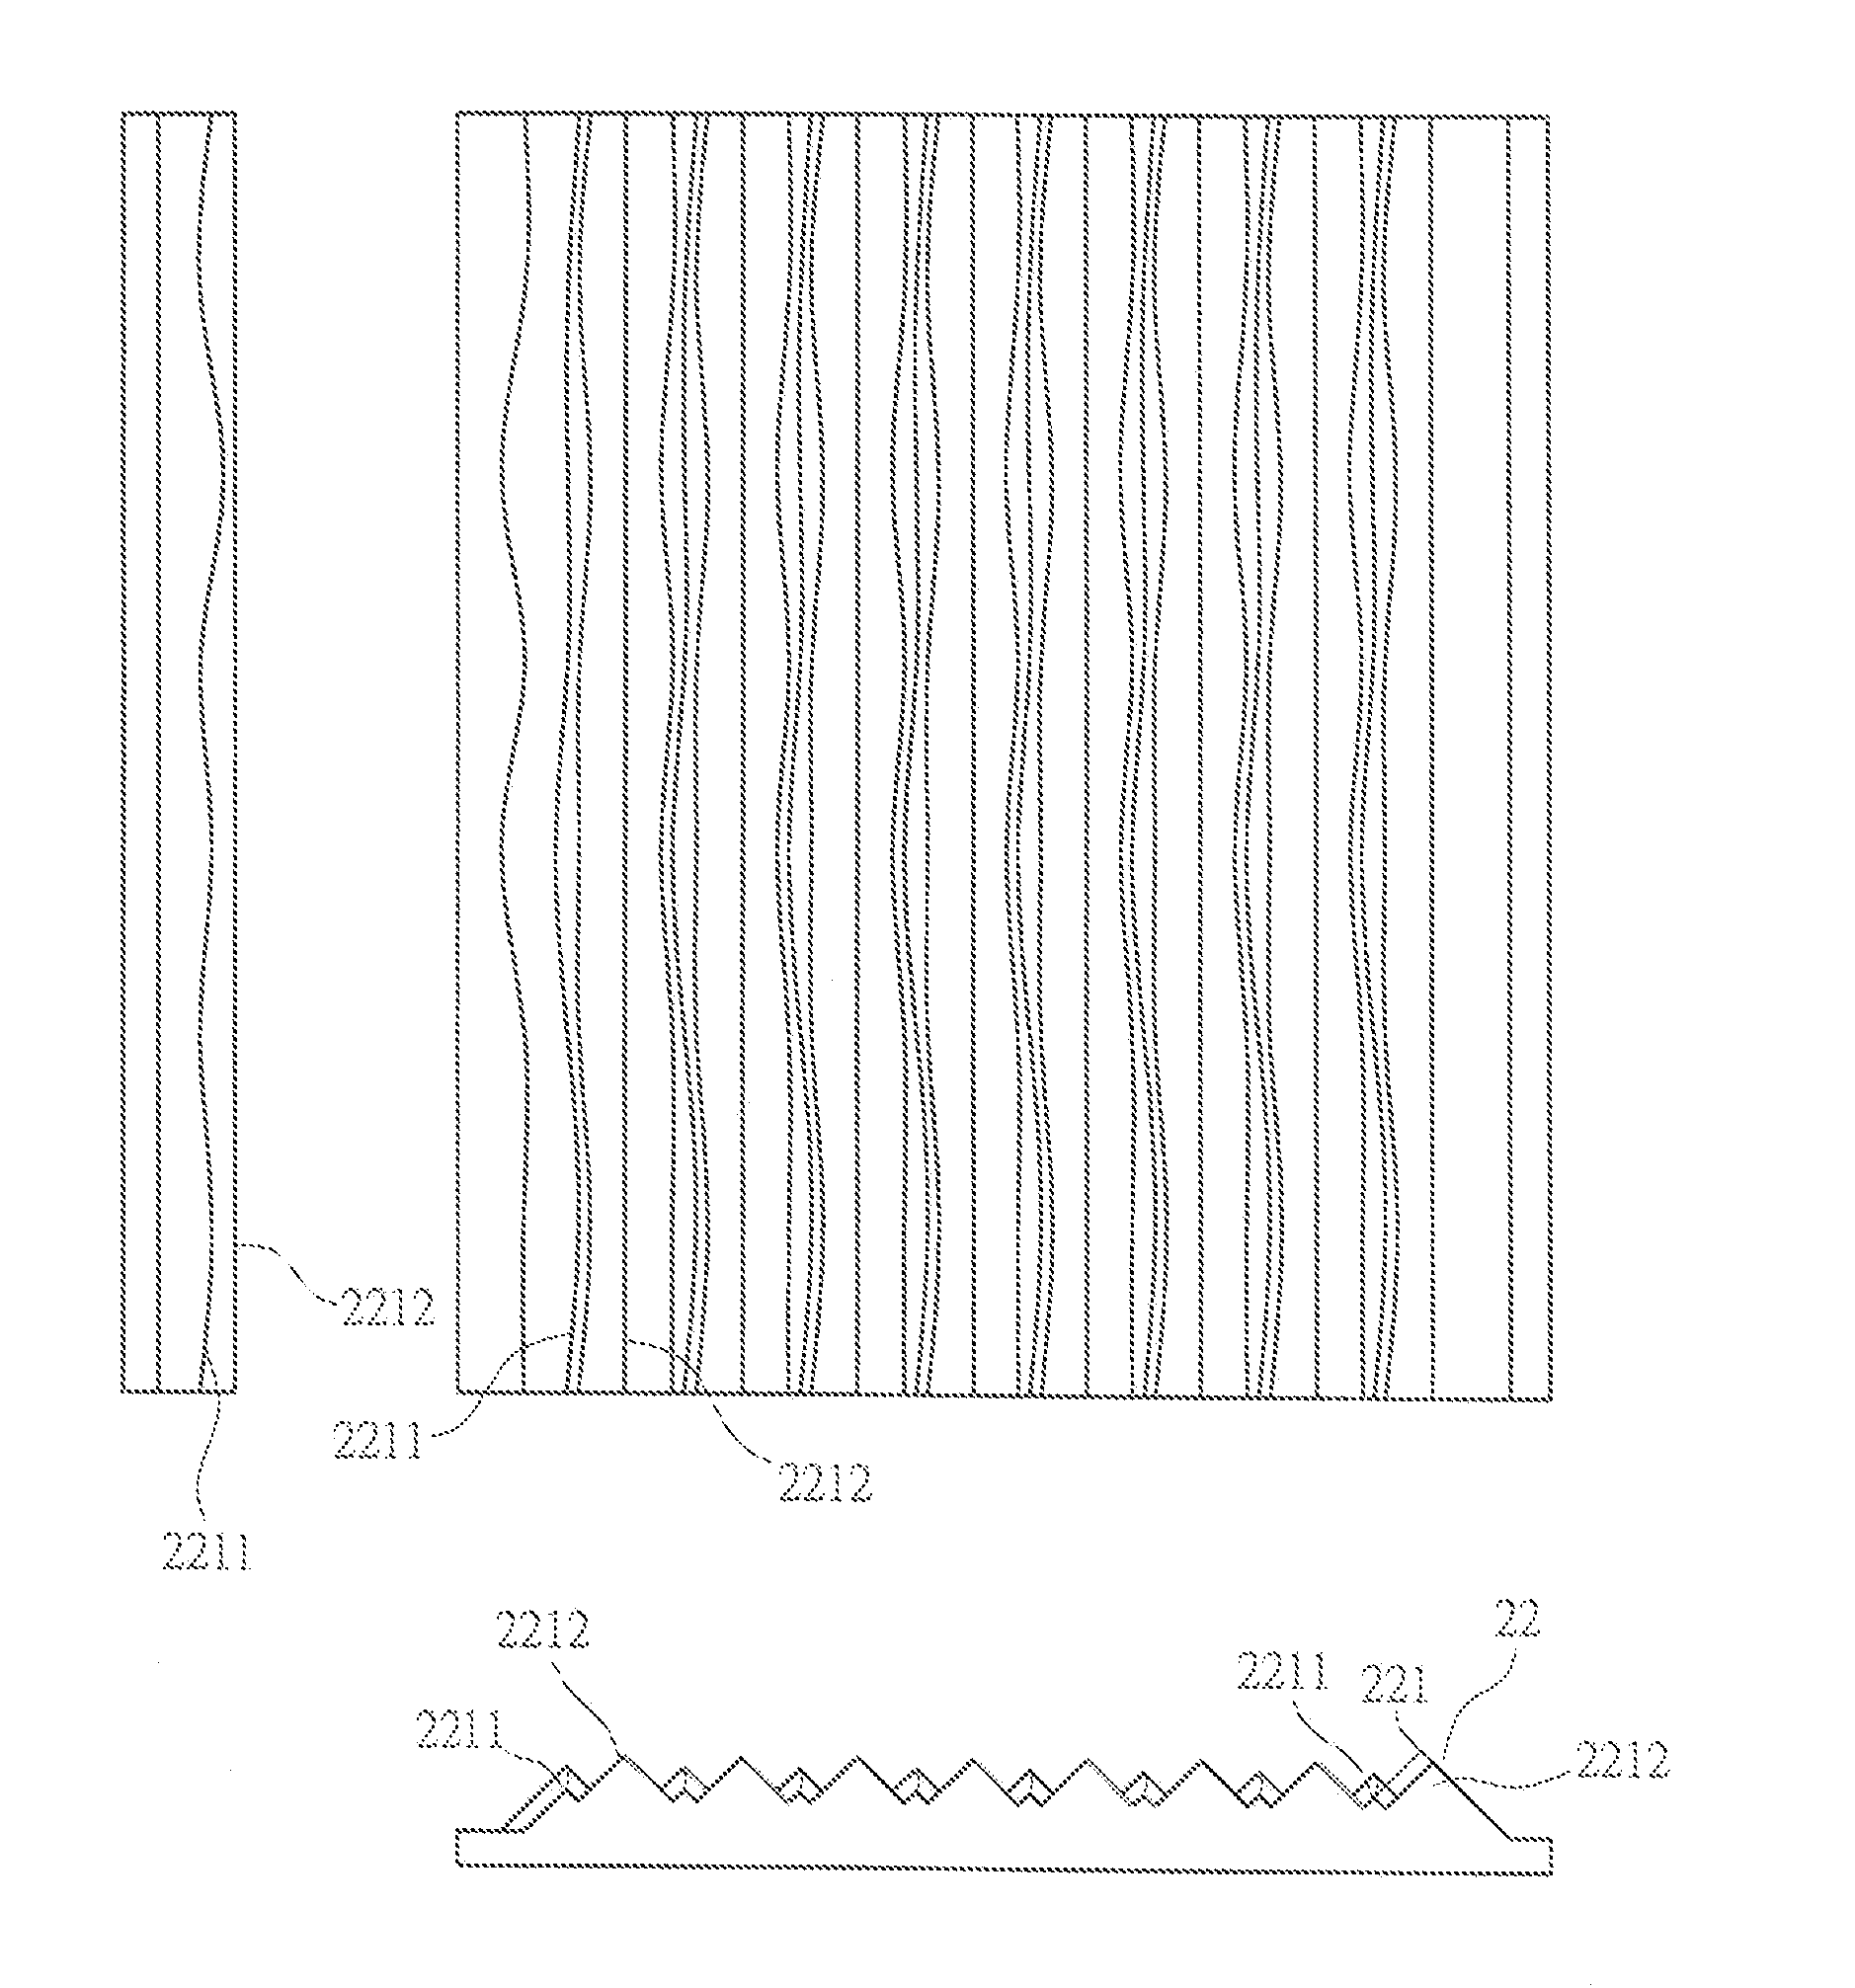 Structure of optic film